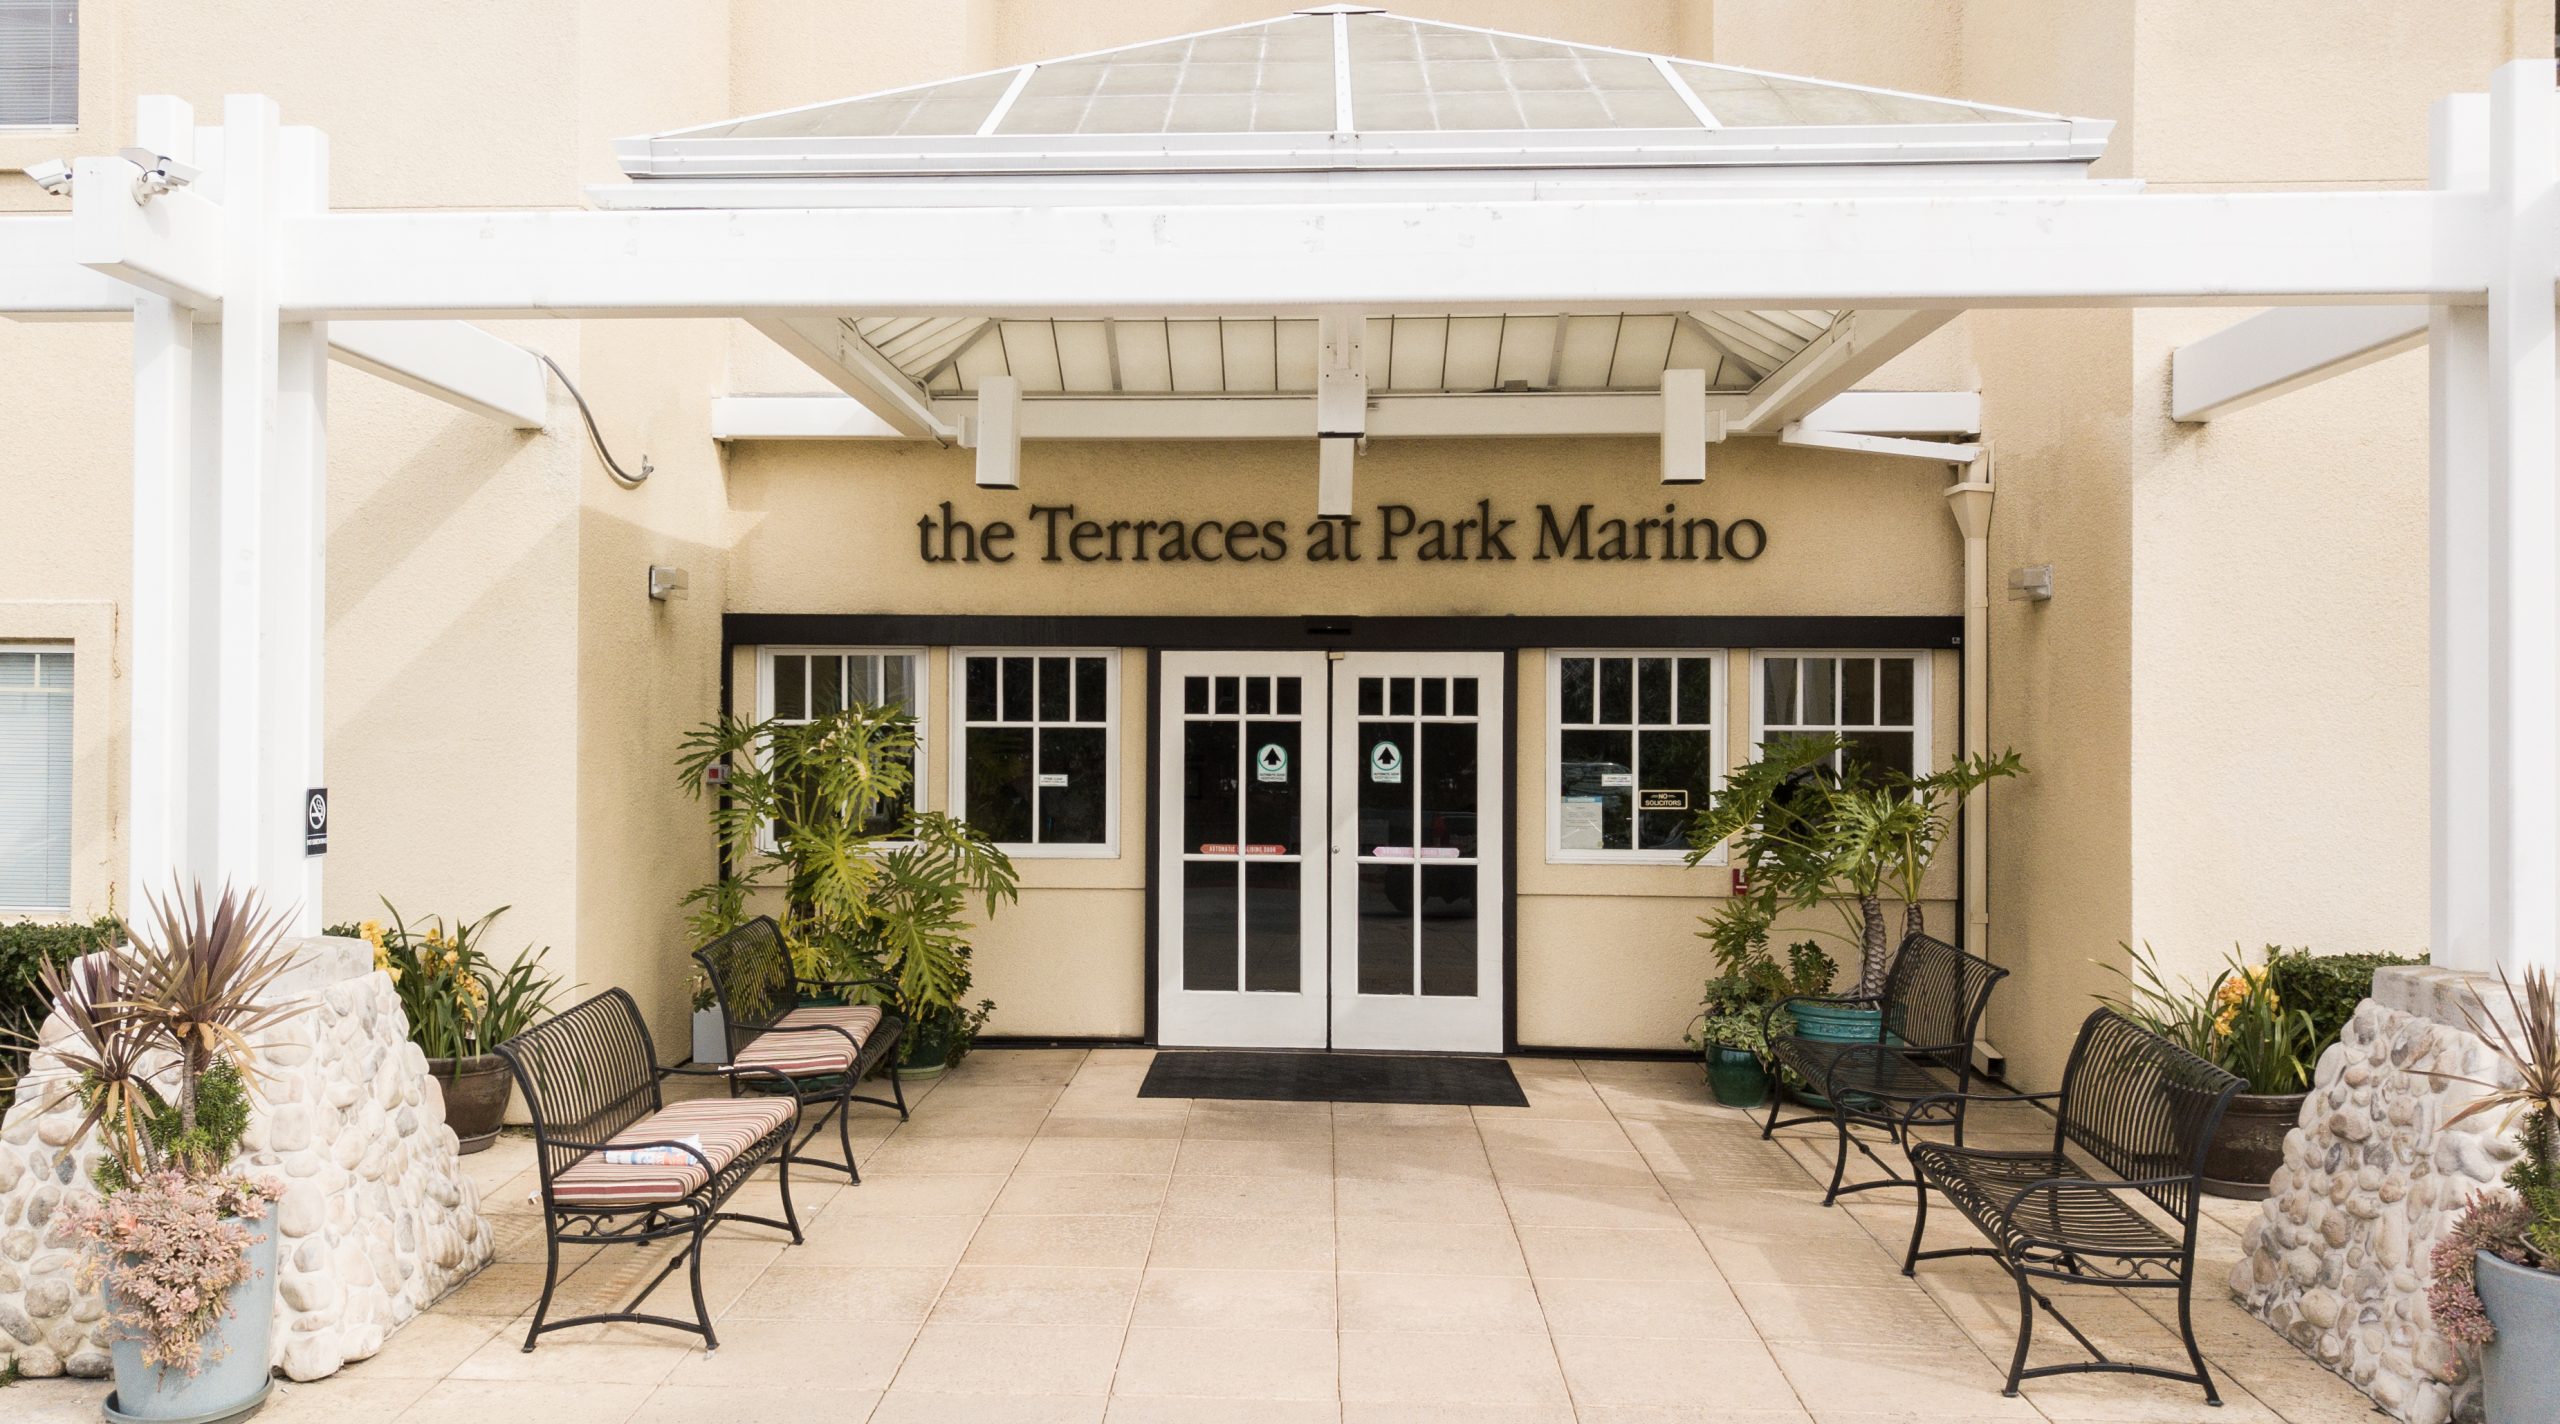 The Terraces at Park Marino